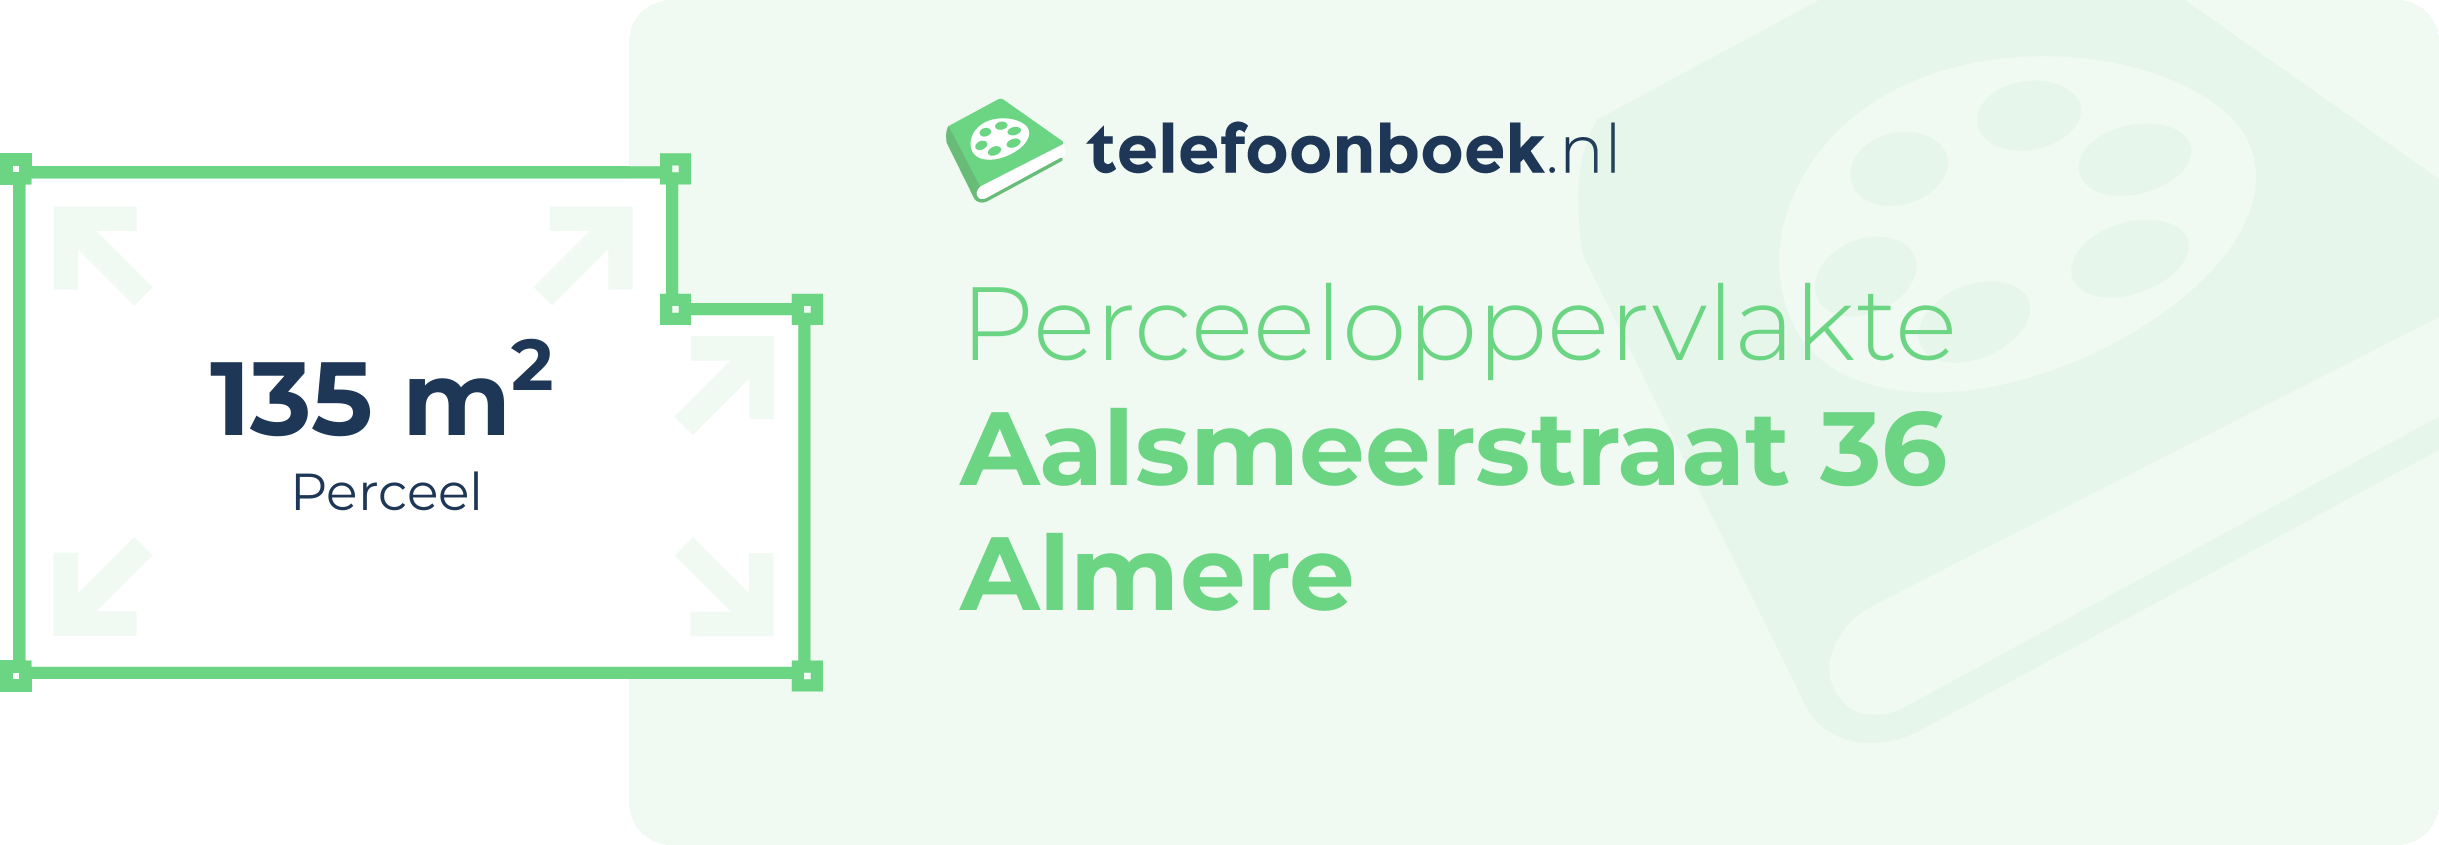 Perceeloppervlakte Aalsmeerstraat 36 Almere